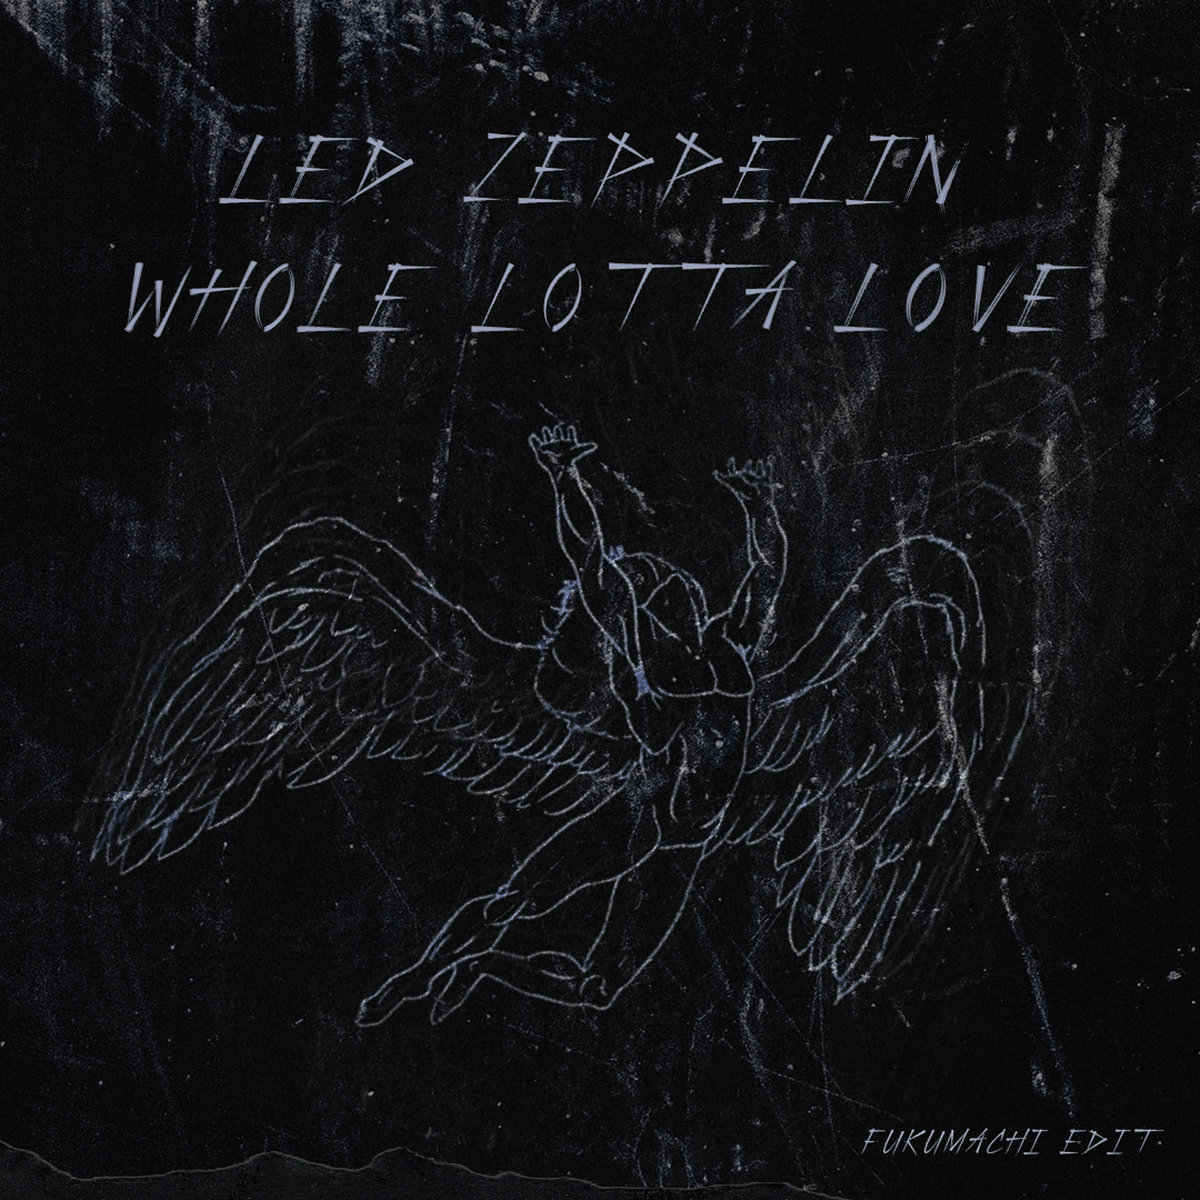 Led zeppelin whole love. 6ixmane. Альбом пол матери. 6ixmane - Motherlode. Обложки песен пол матери.